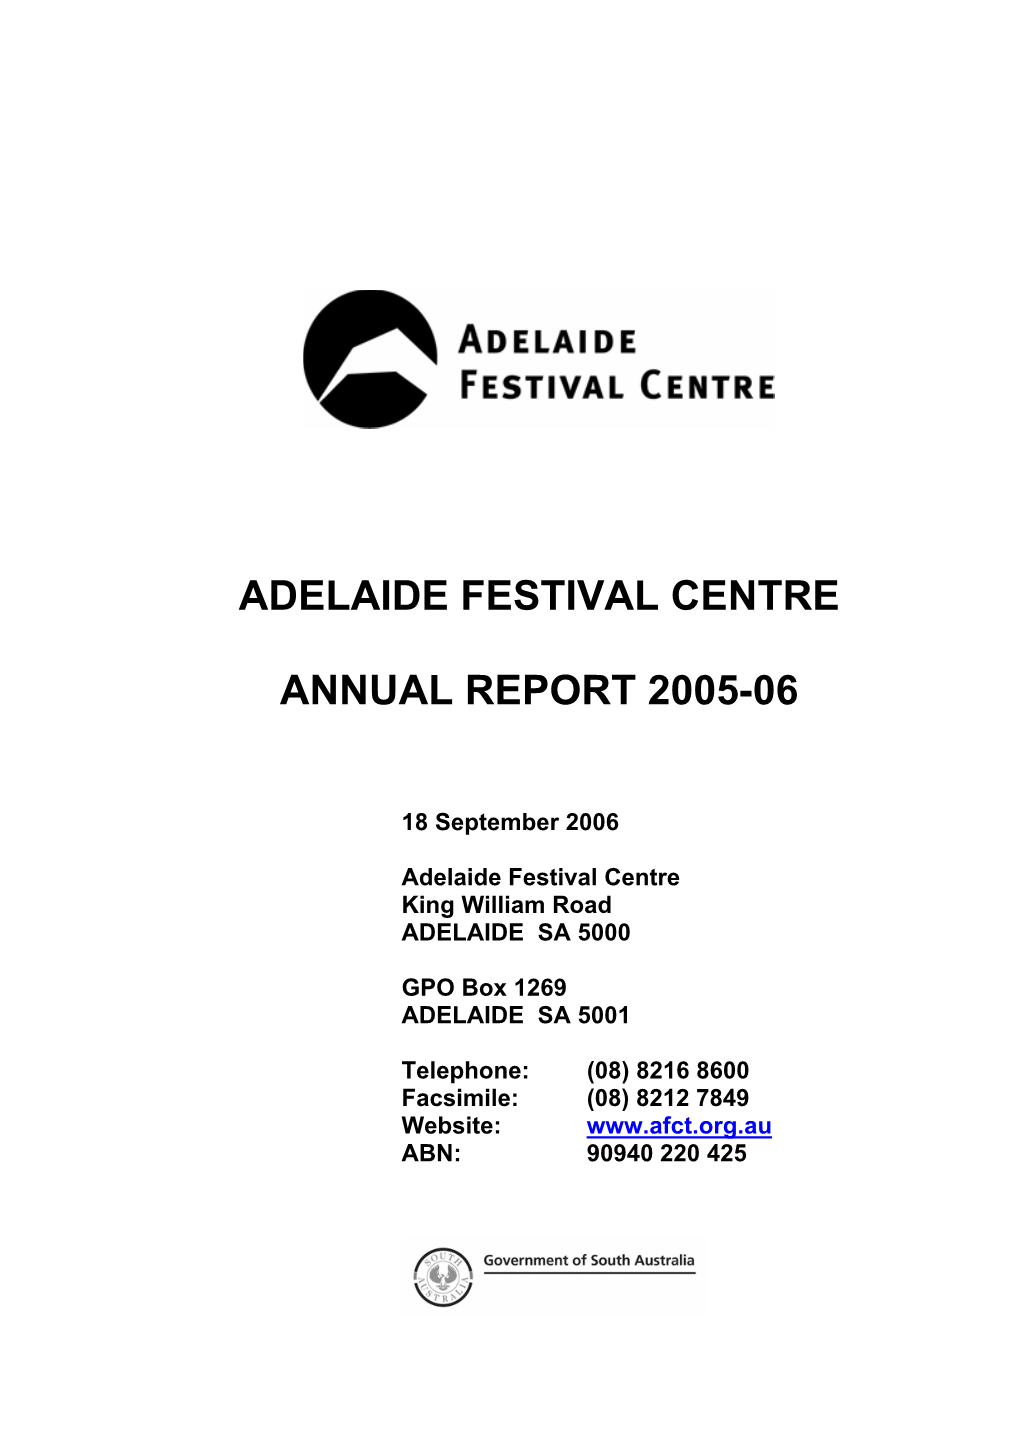 Adelaide Festival Centre Annual Report 2005-06